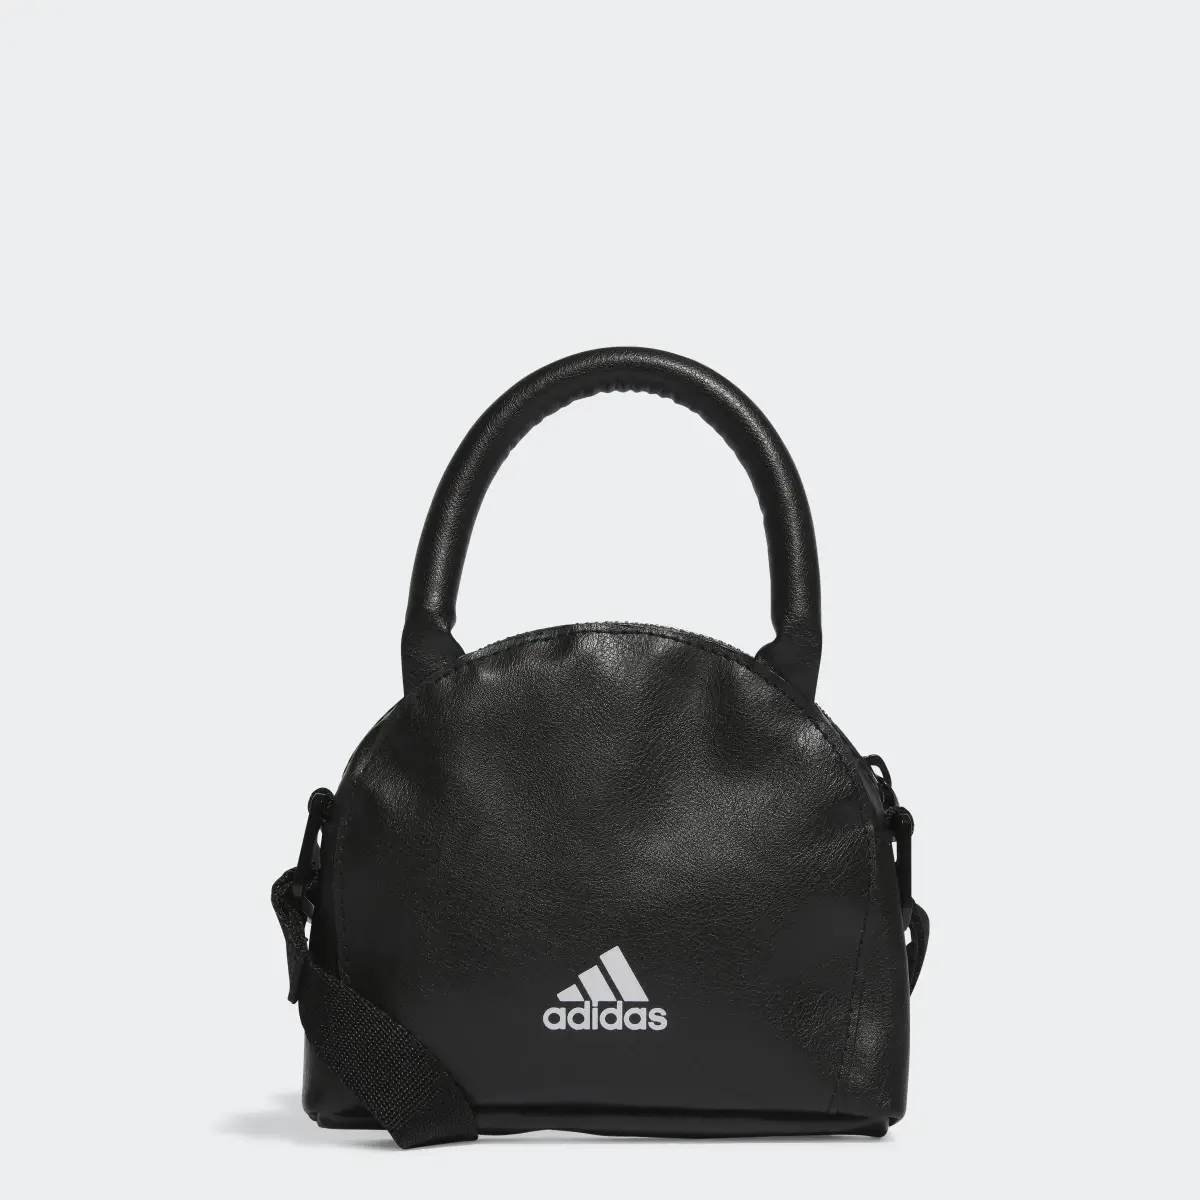 Adidas Unisex PU Kettle Bag. 1